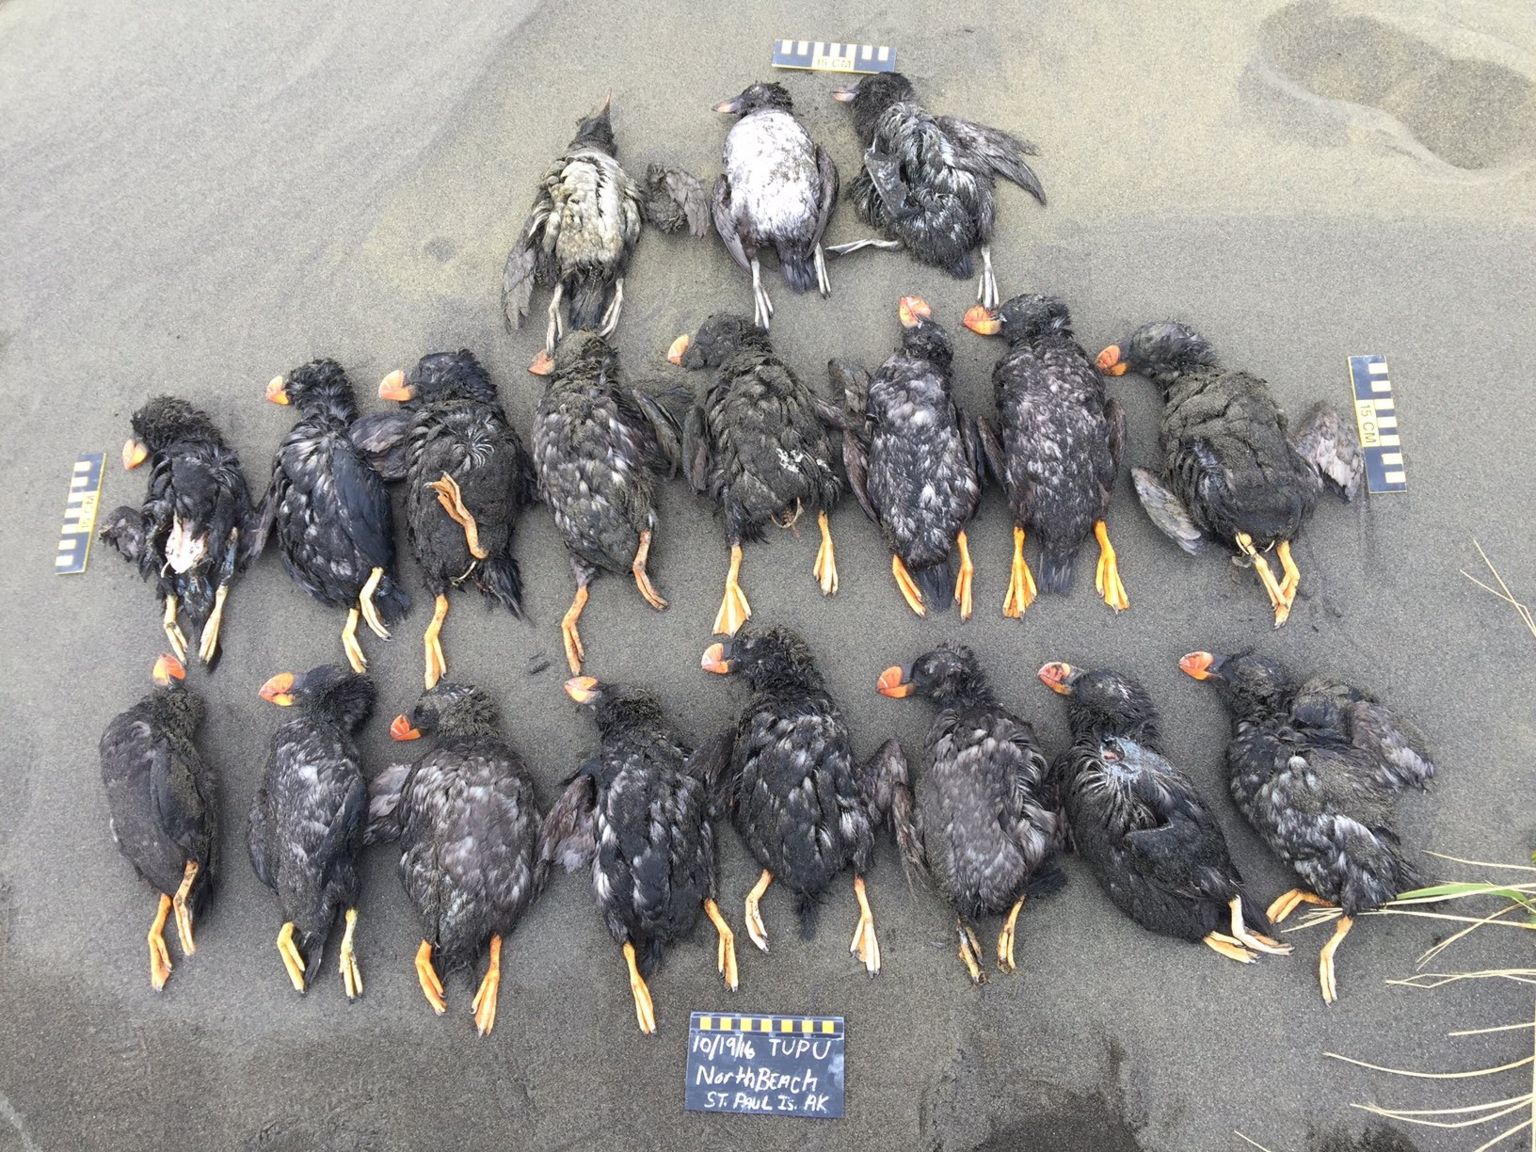 Puffins found on North Beach, St. Paul, Pribilof Islands, Alaska, on October 19, 2016.